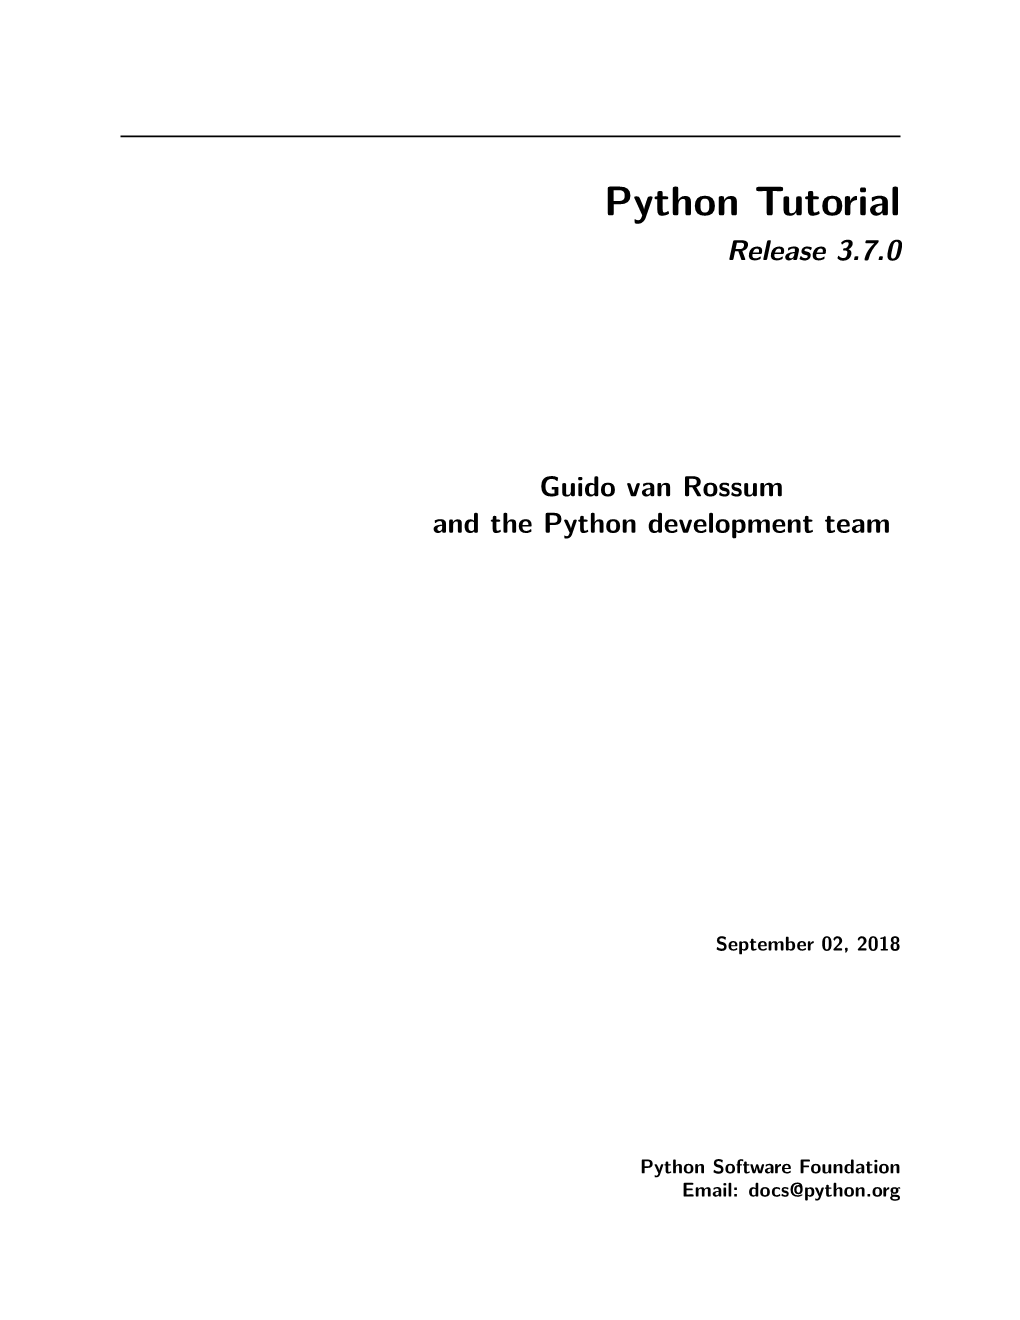 Python Tutorial Release 3.7.0